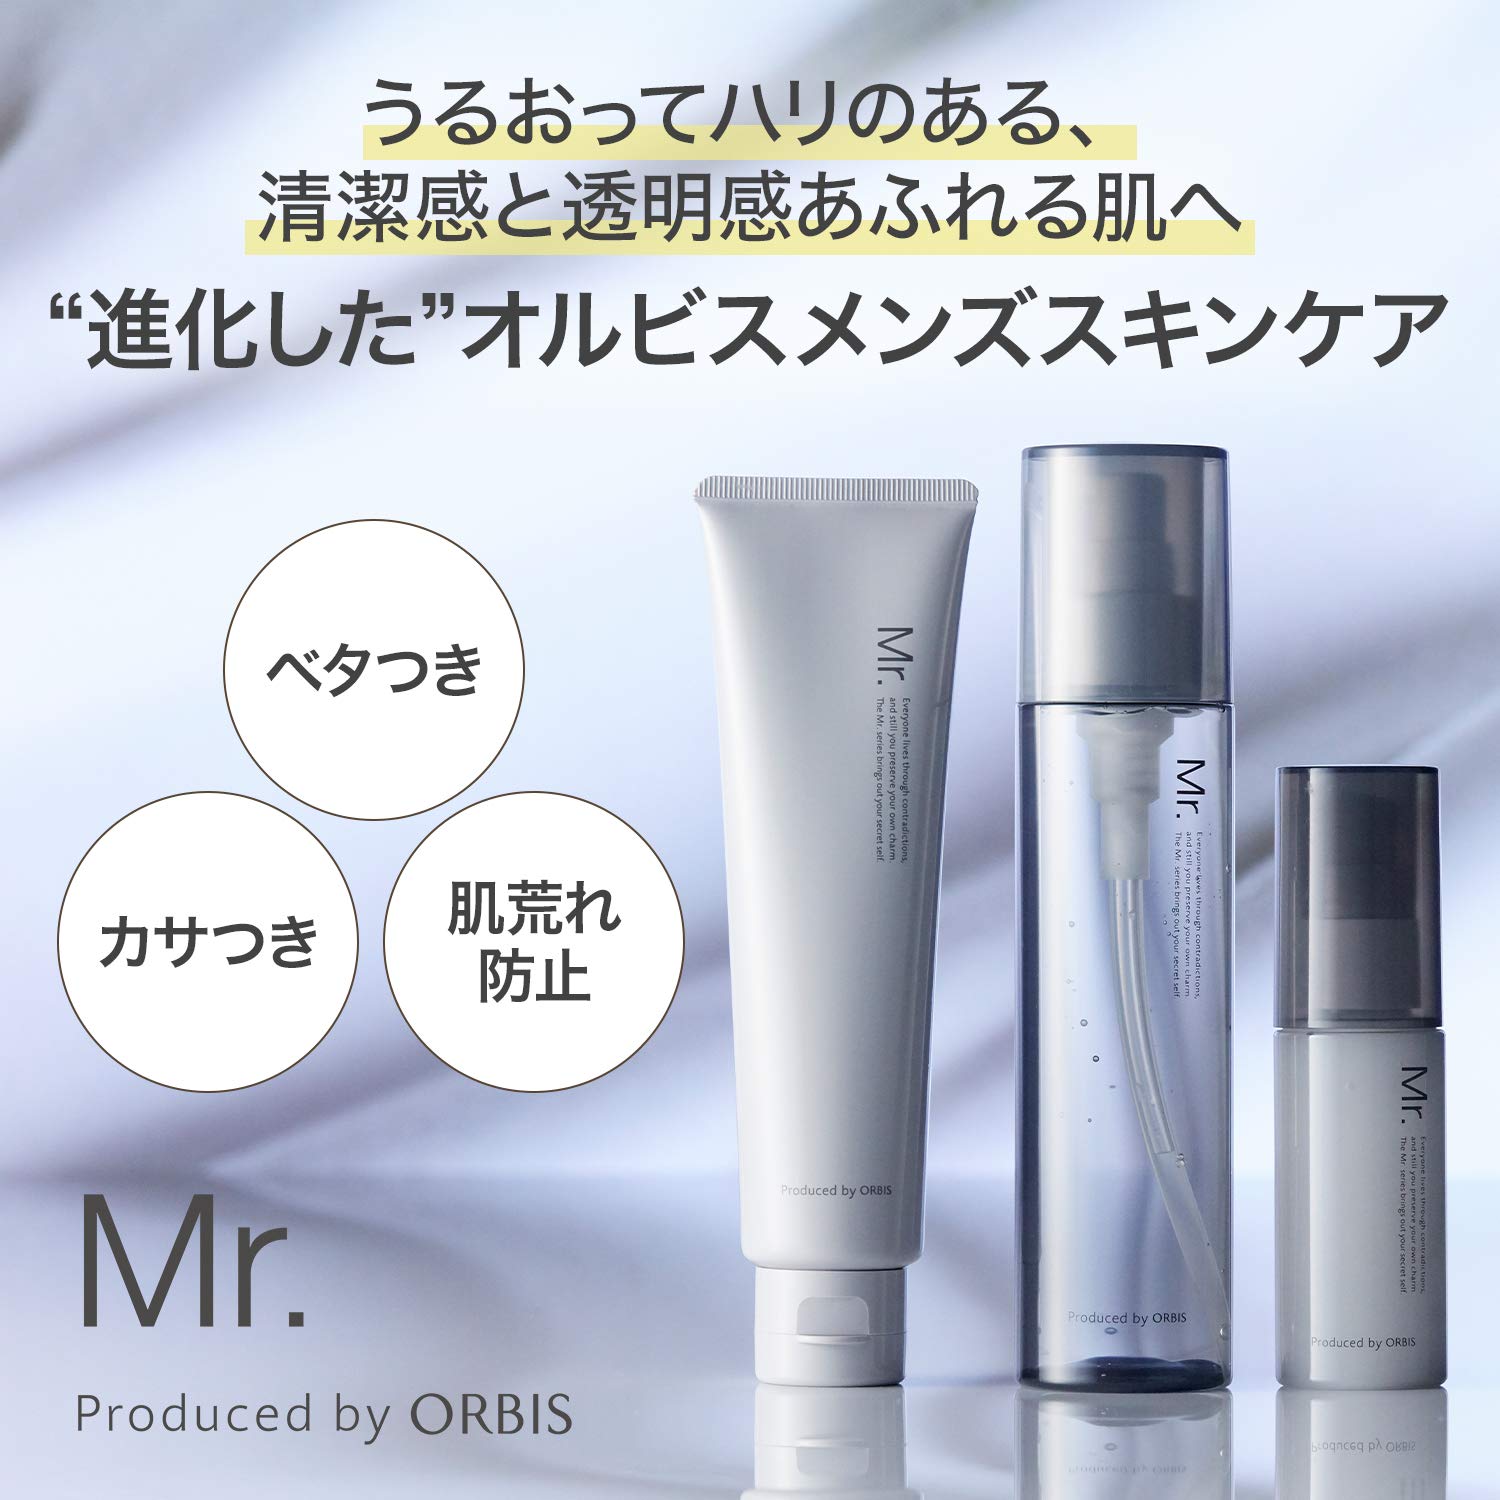 Chifure Perfect Makeup Cleansing Gel Cream 120g - Japanese Makeup Removers - YOYO JAPAN